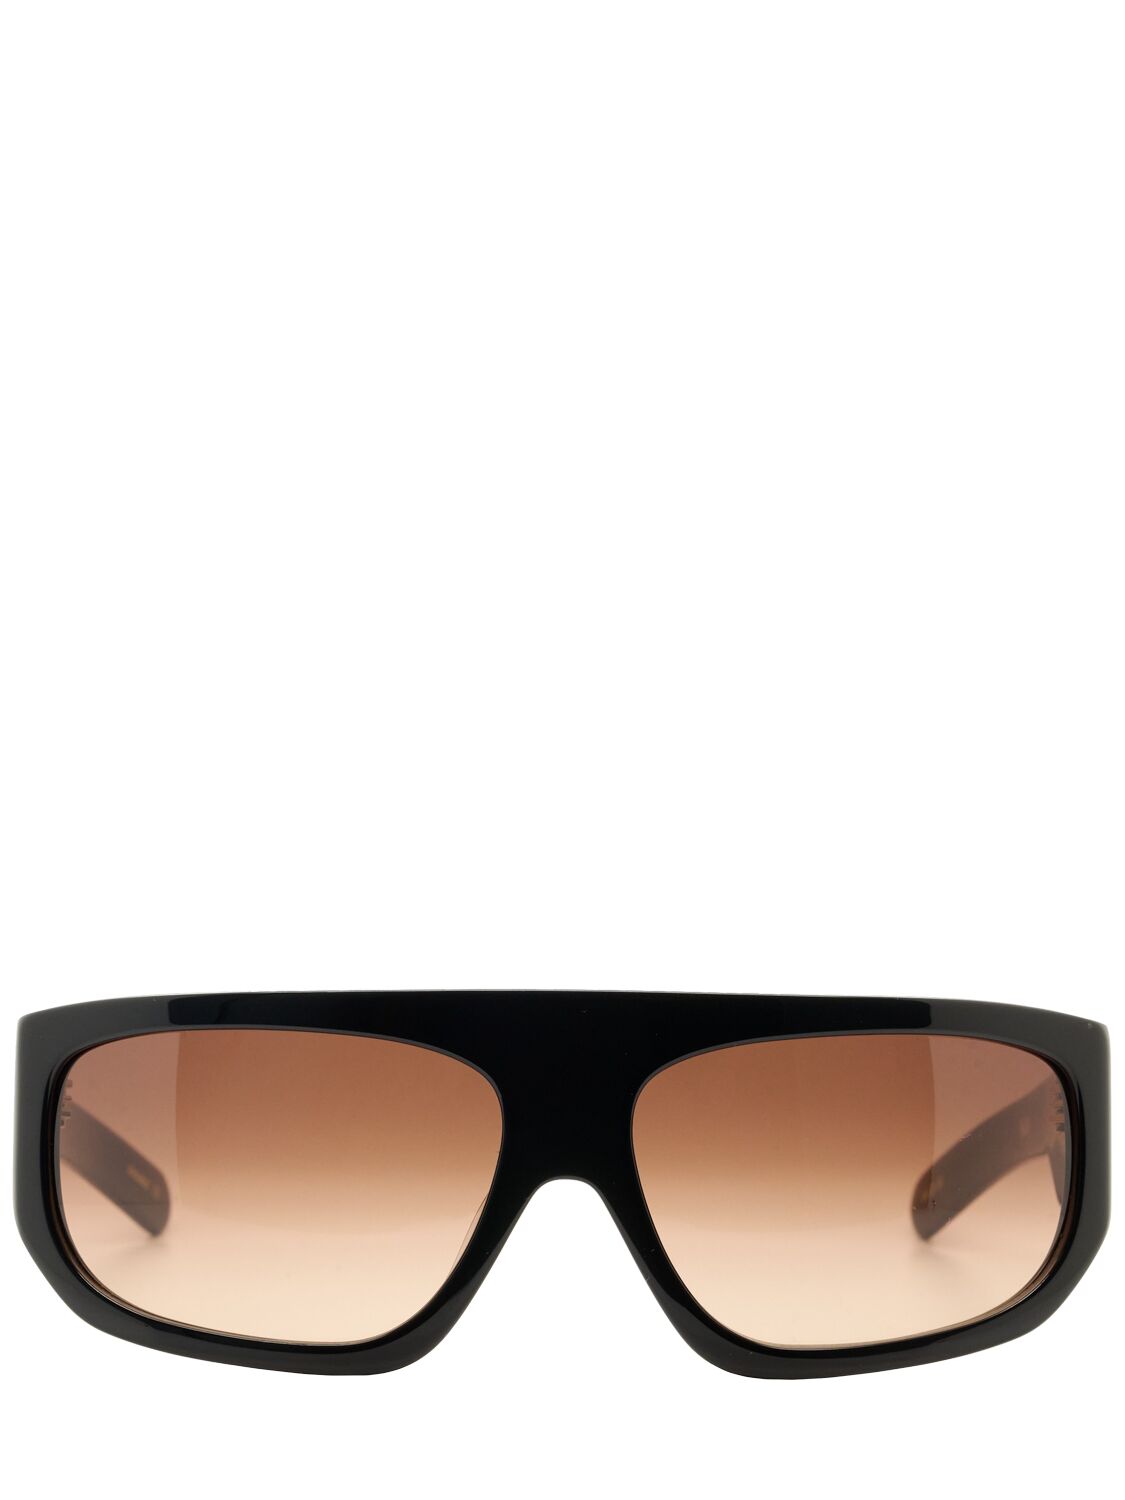 Flatlist Eyewear Farah Acetate Sunglasses W/gradient Lens In Black